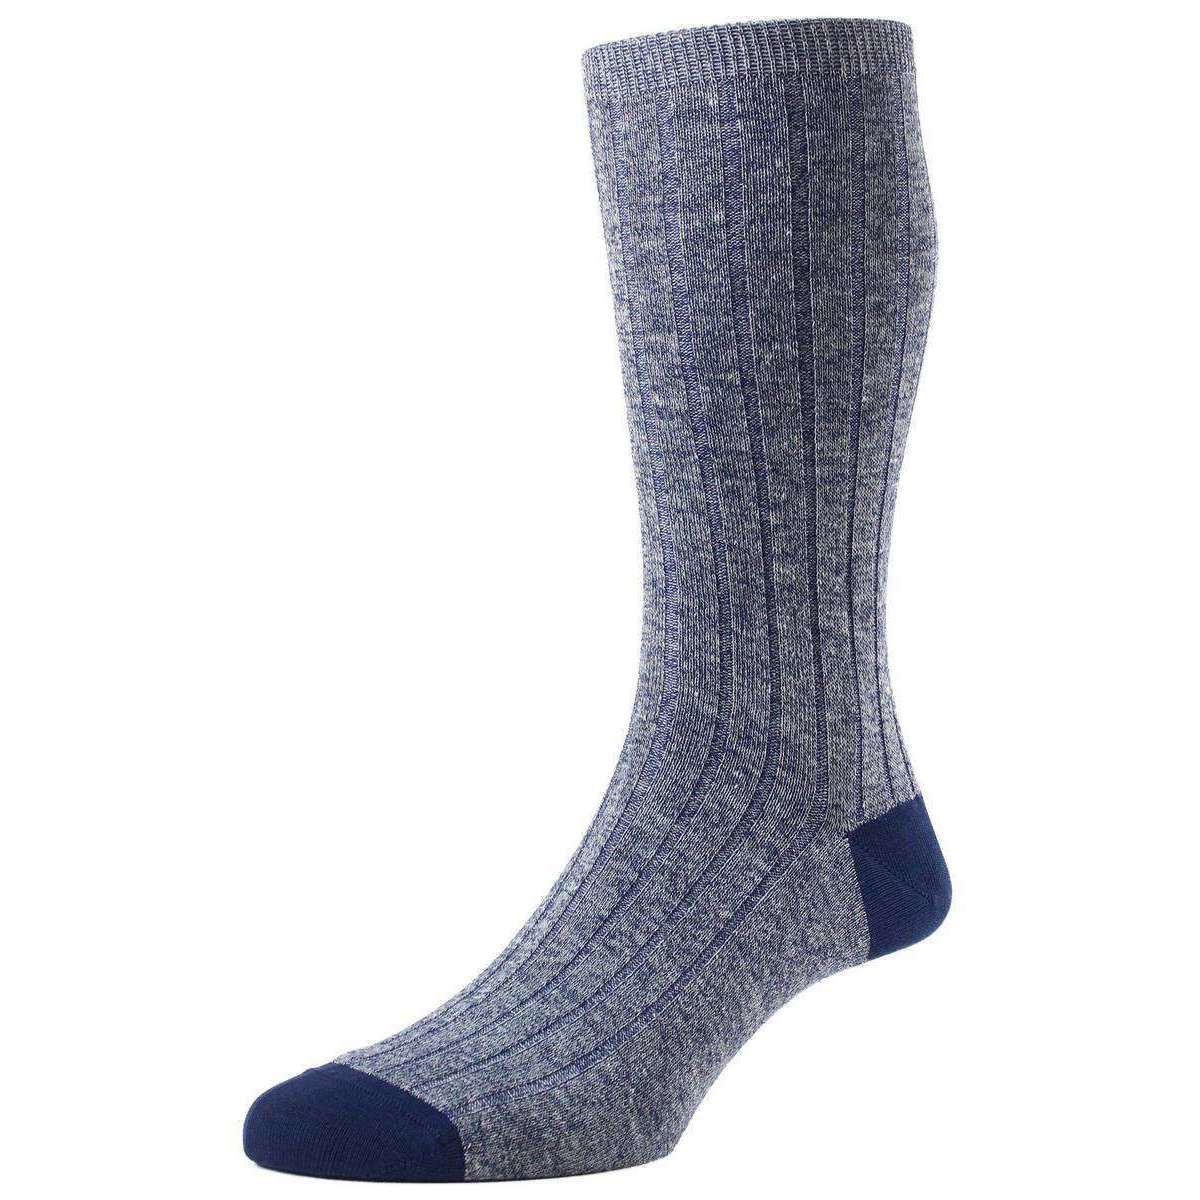 Pantherella Hamada Contrast Heel and Toe Linen Blend Socks - Indigo Blue